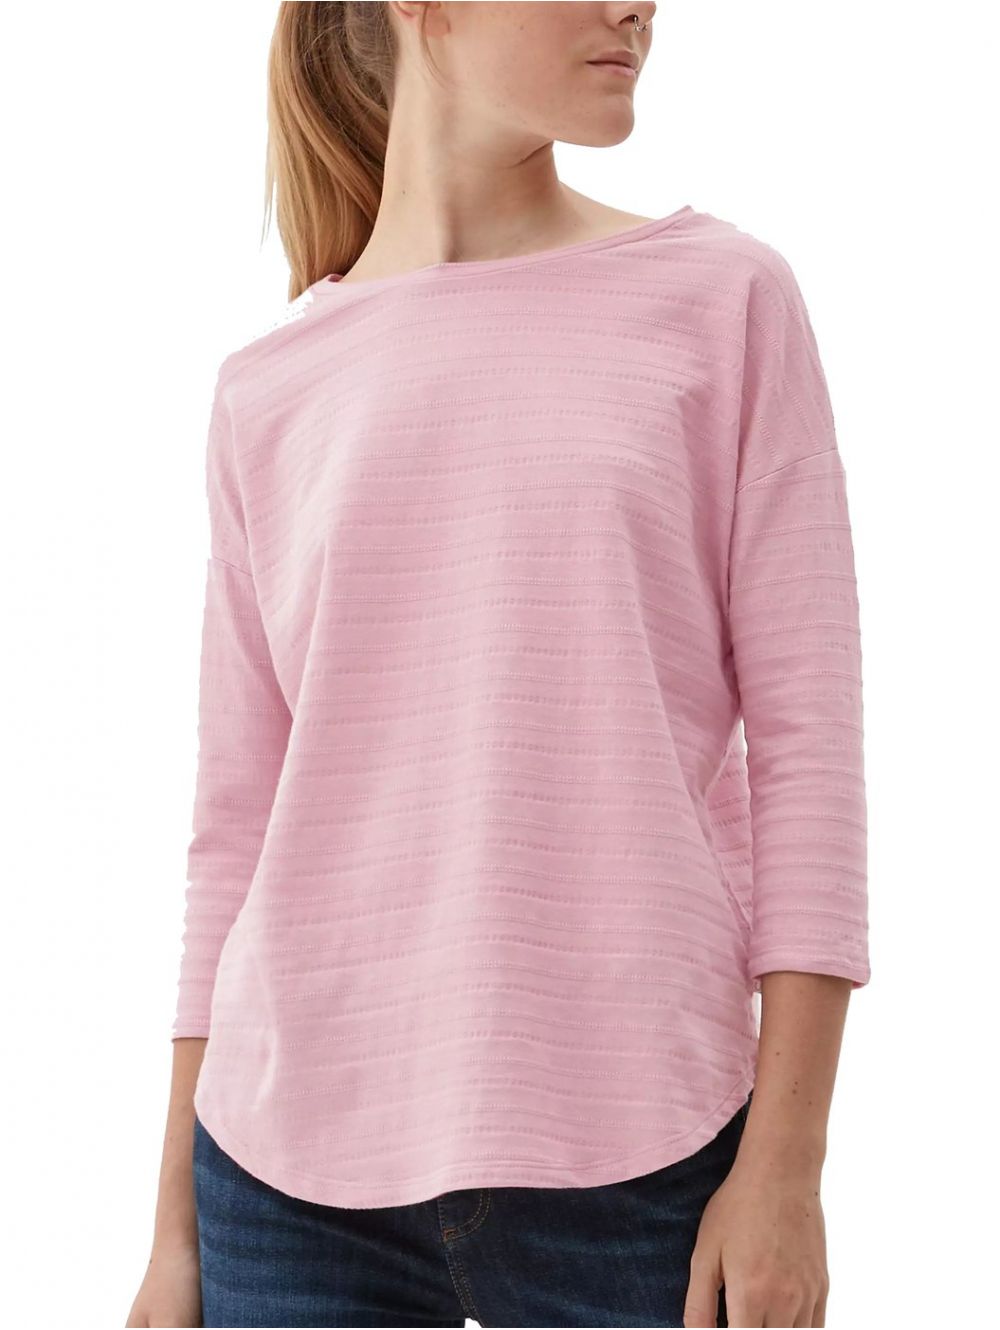 2119840.4311 blouse pink Women\'s S.OLIVER Rose